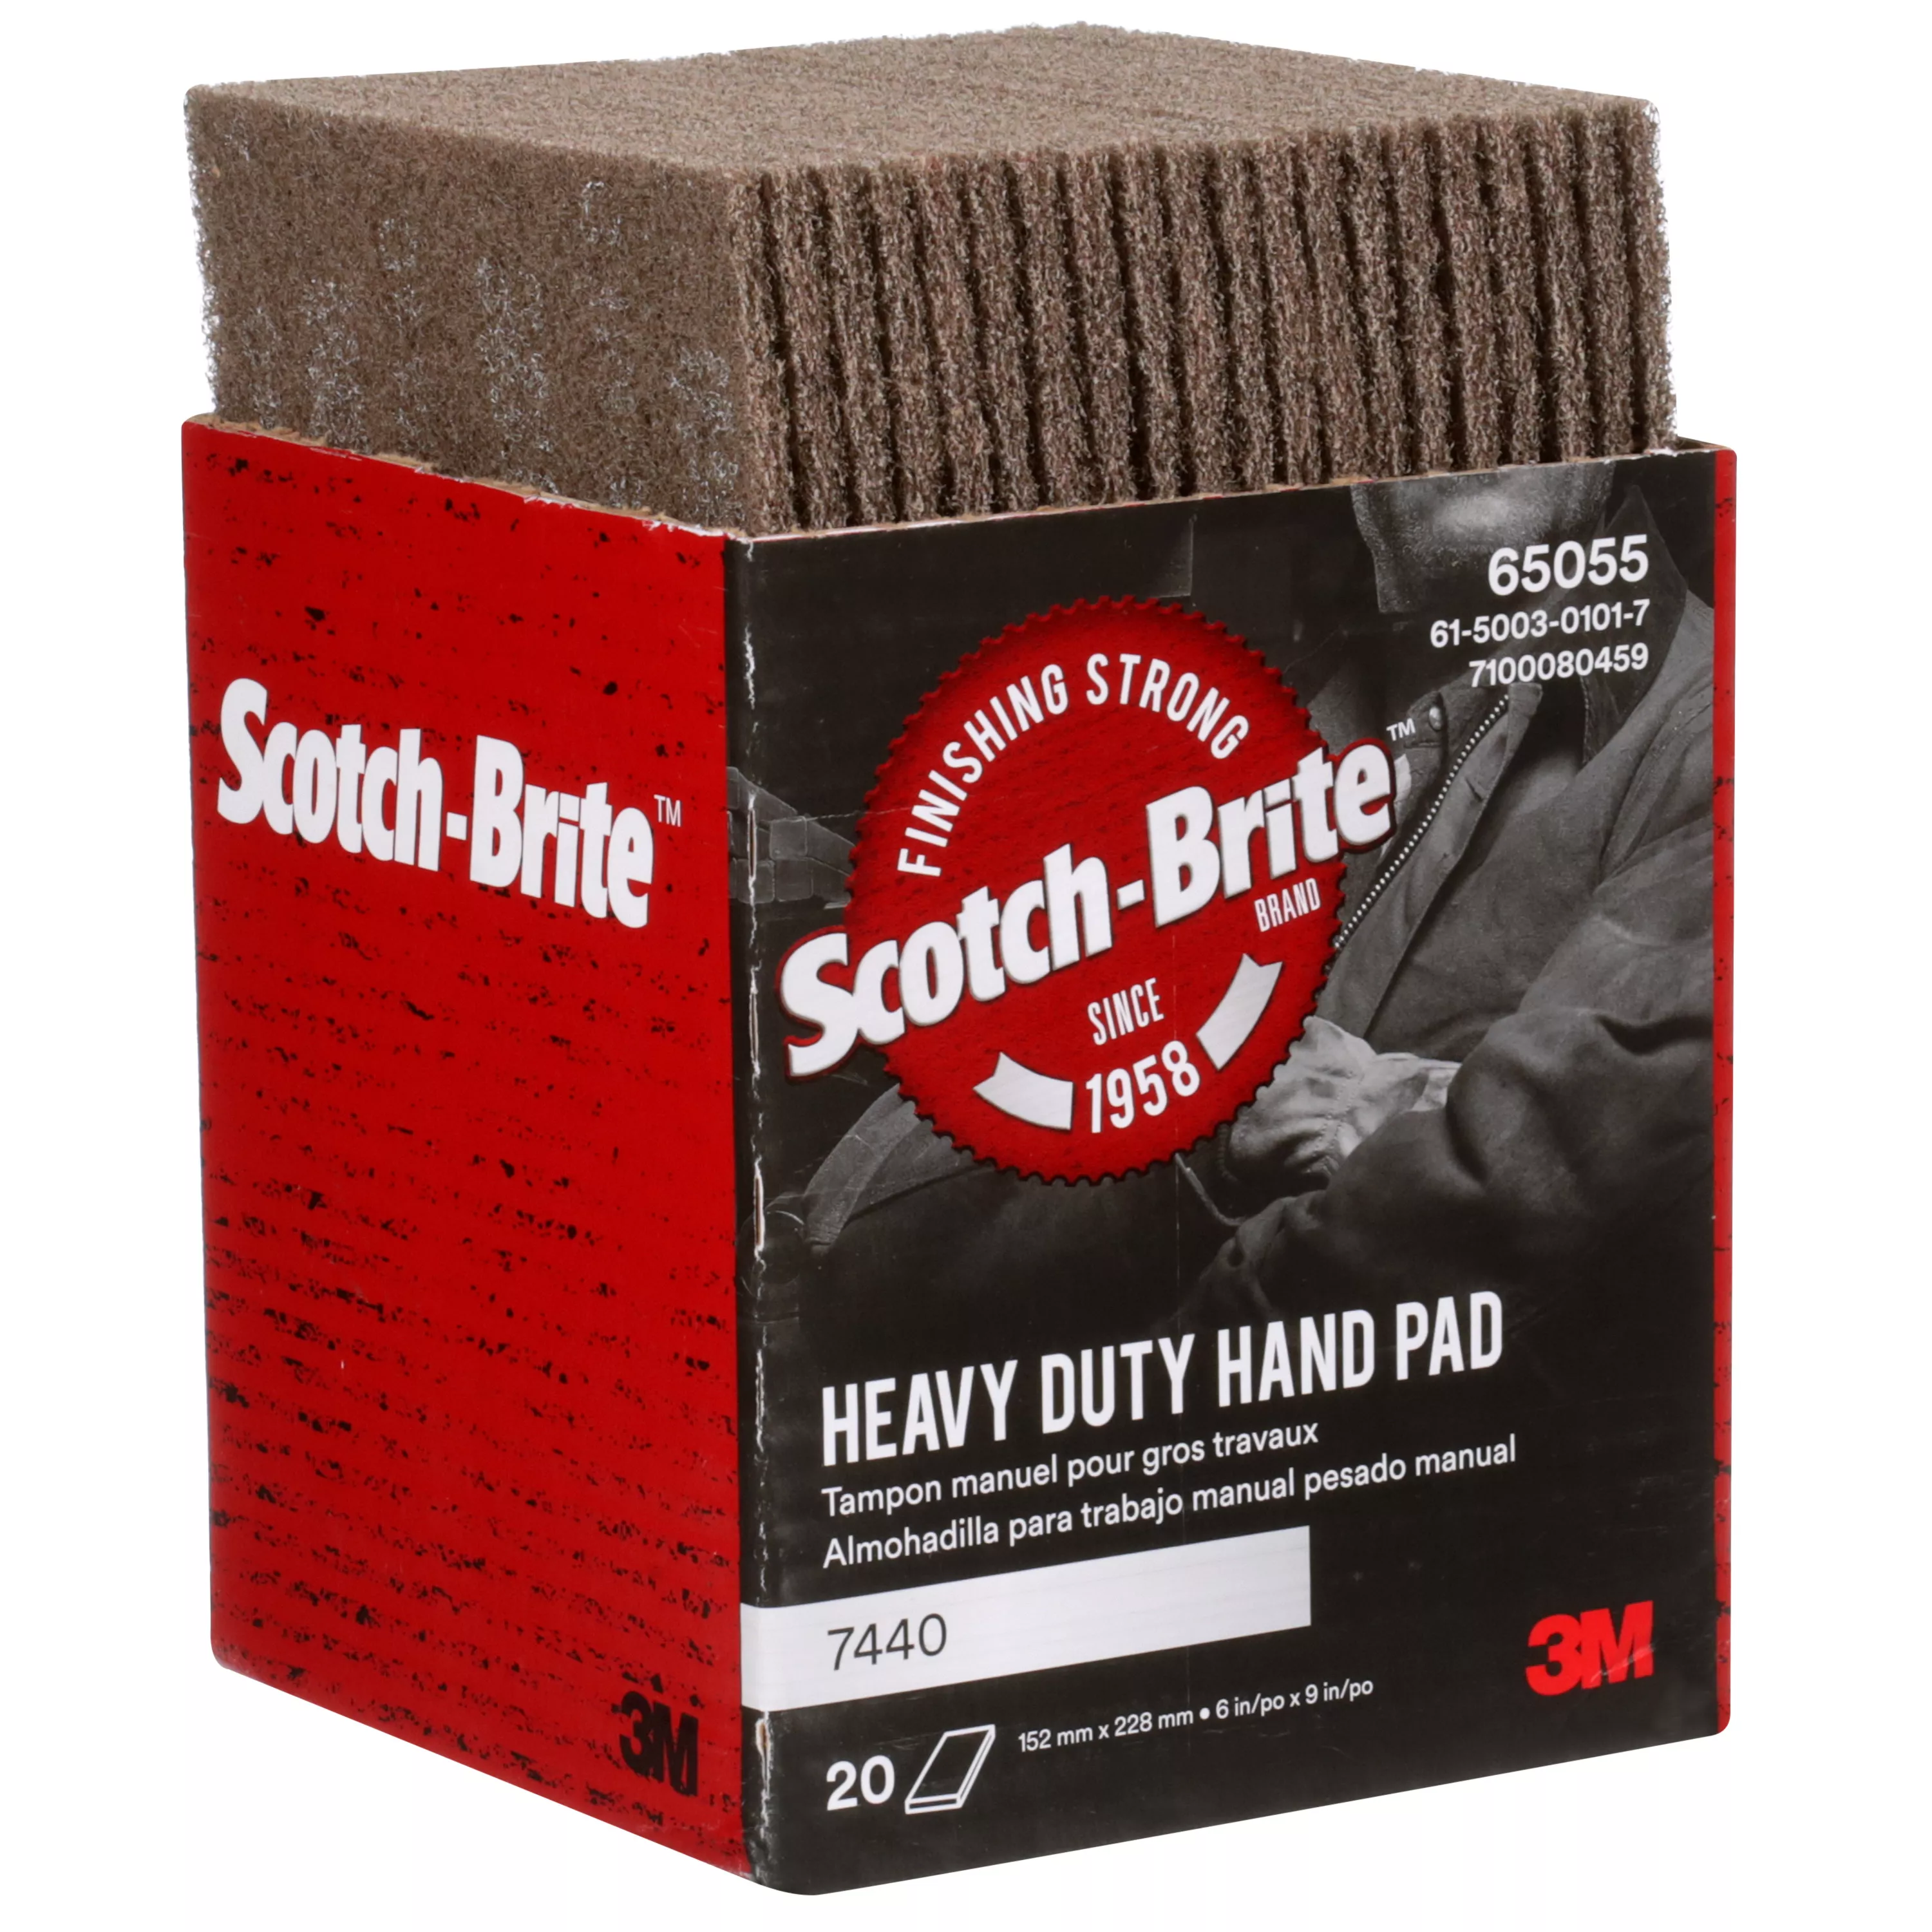 SKU 7100080459 | Scotch-Brite™ Heavy Duty Hand Pad 7440